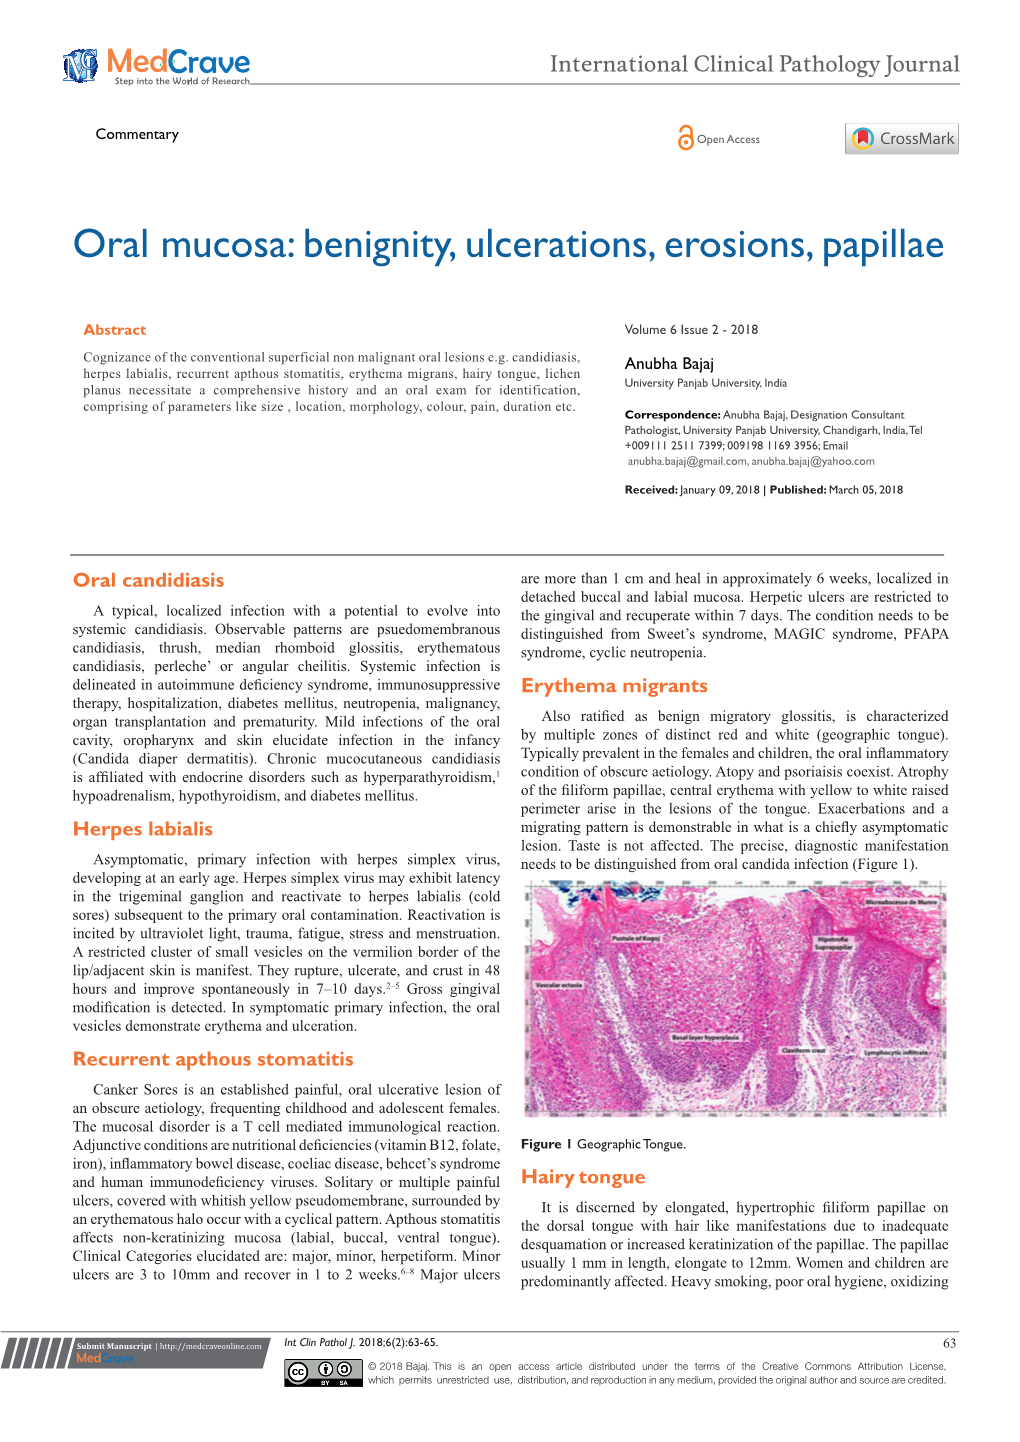 Oral Mucosa: Benignity, Ulcerations, Erosions, Papillae